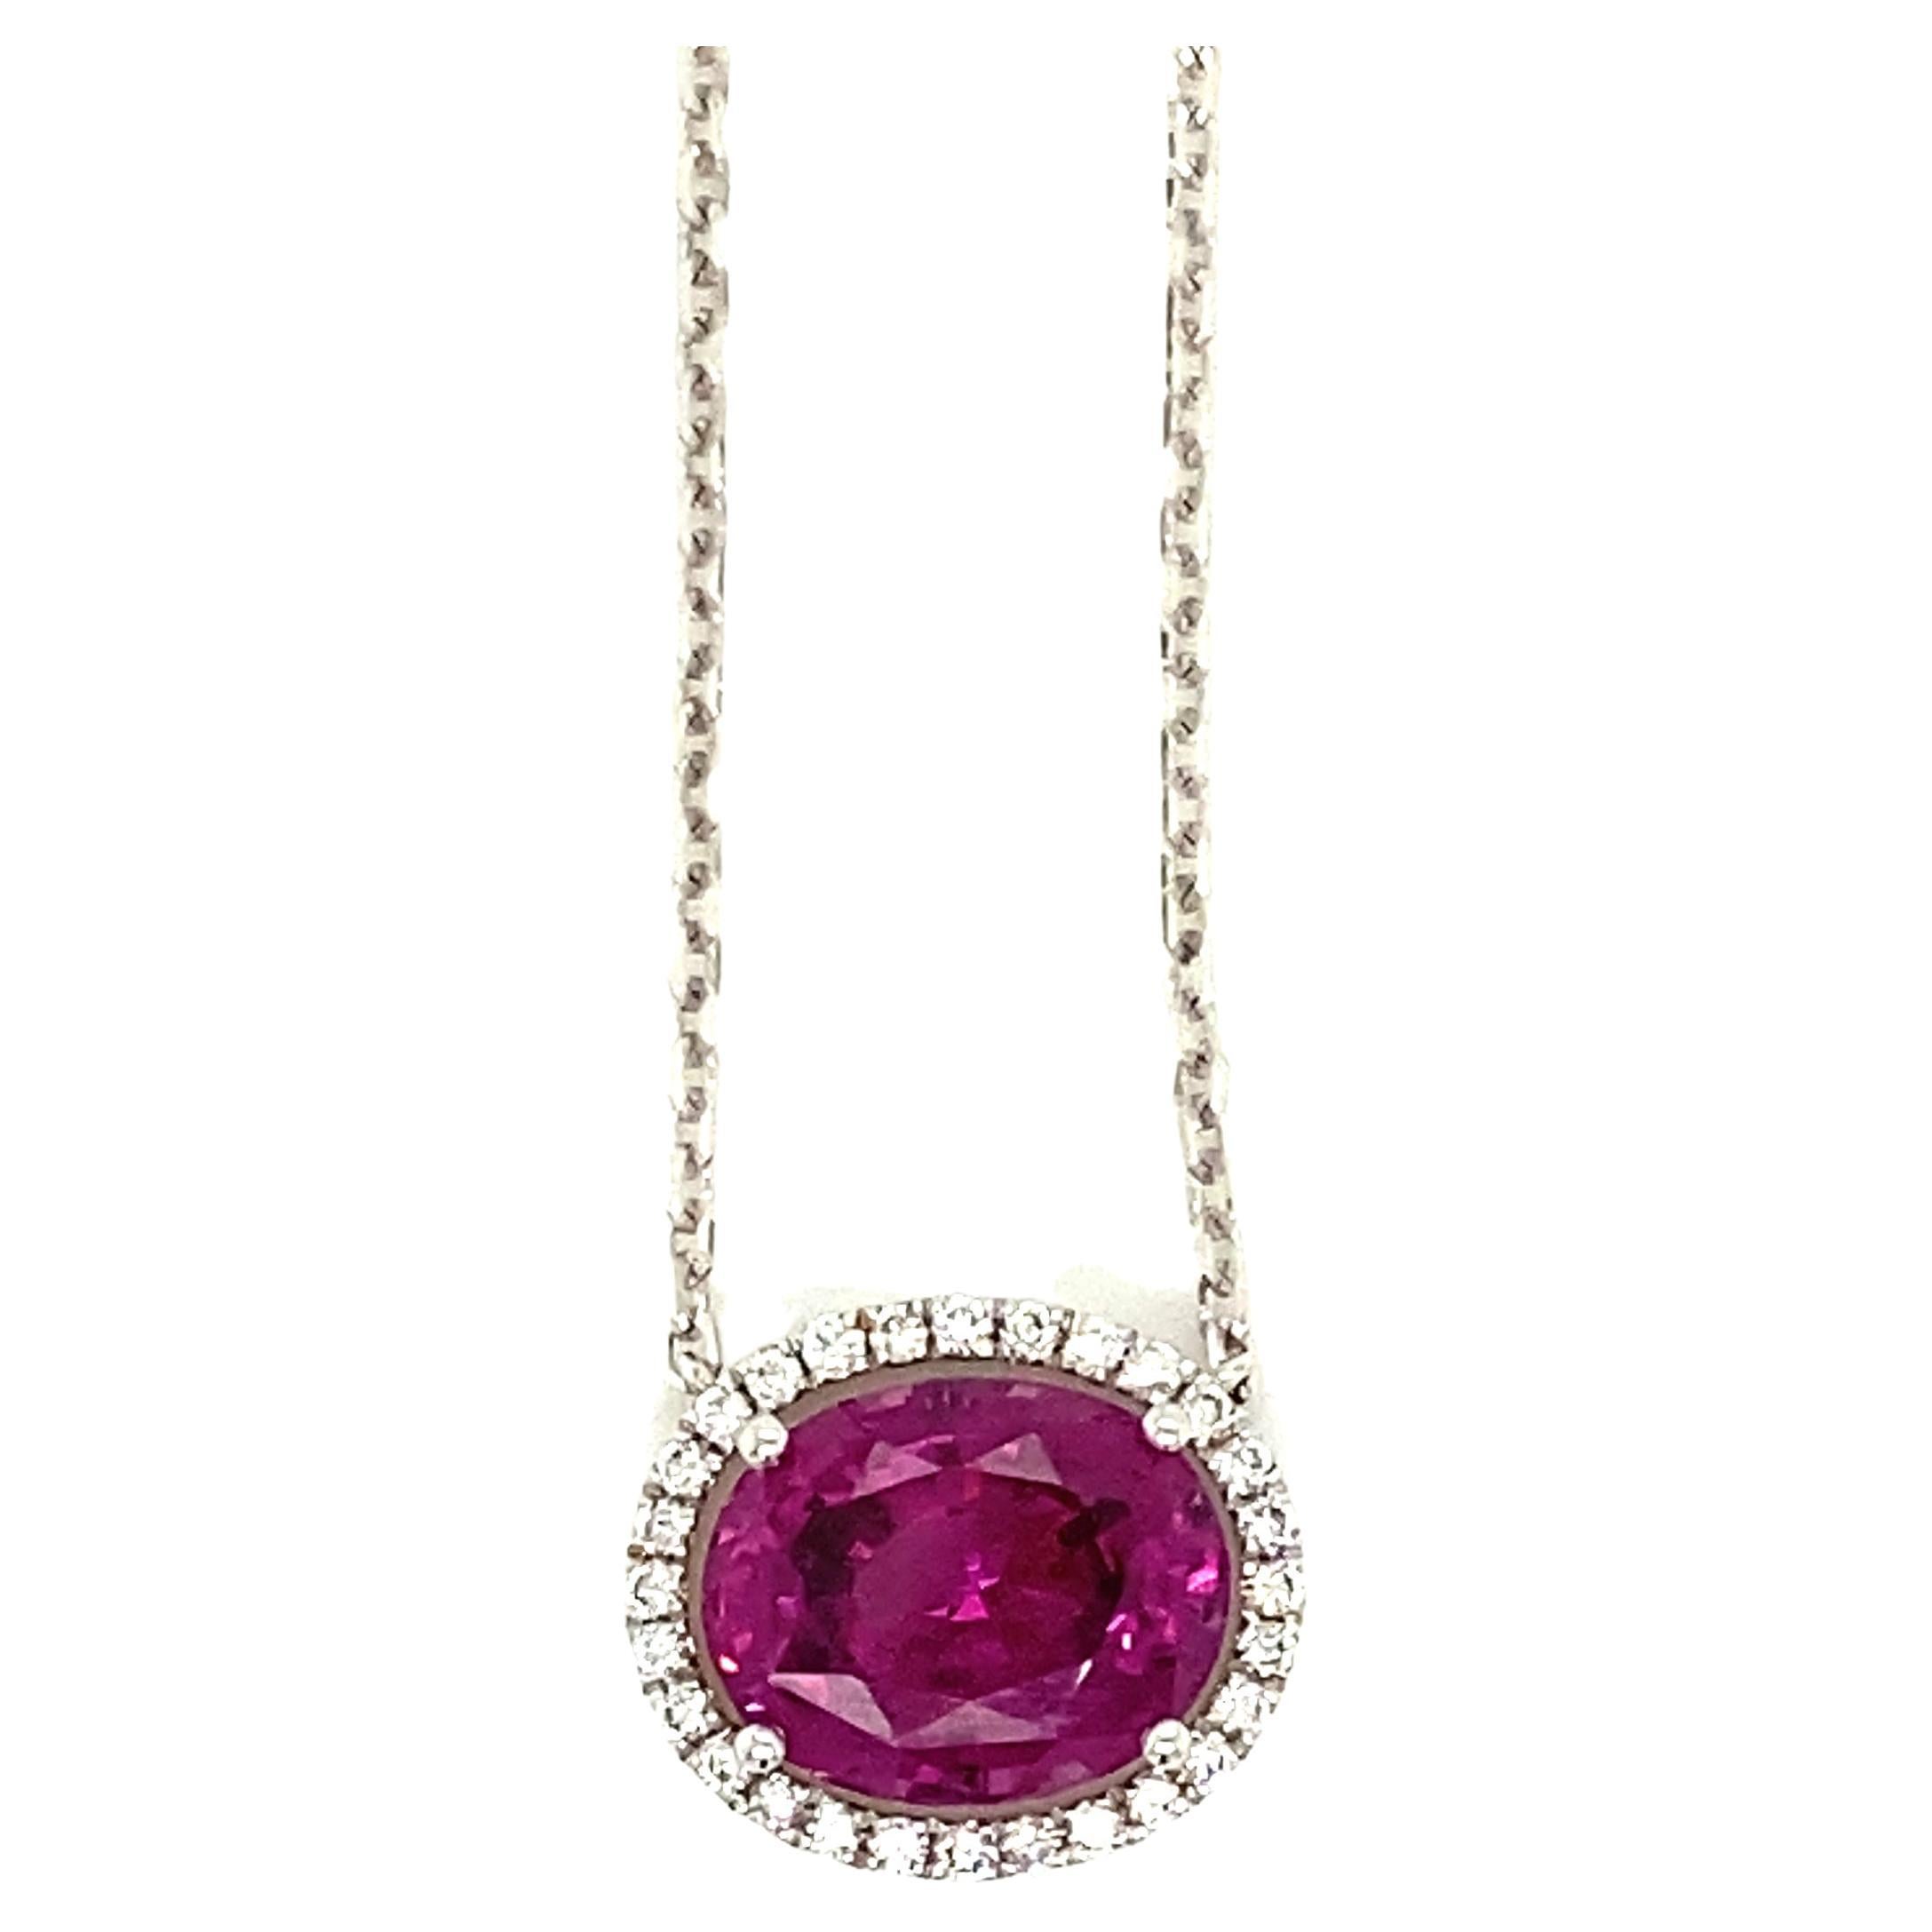 3.75Carat Pink-Purple Garnet and Diamond Pendant Necklace